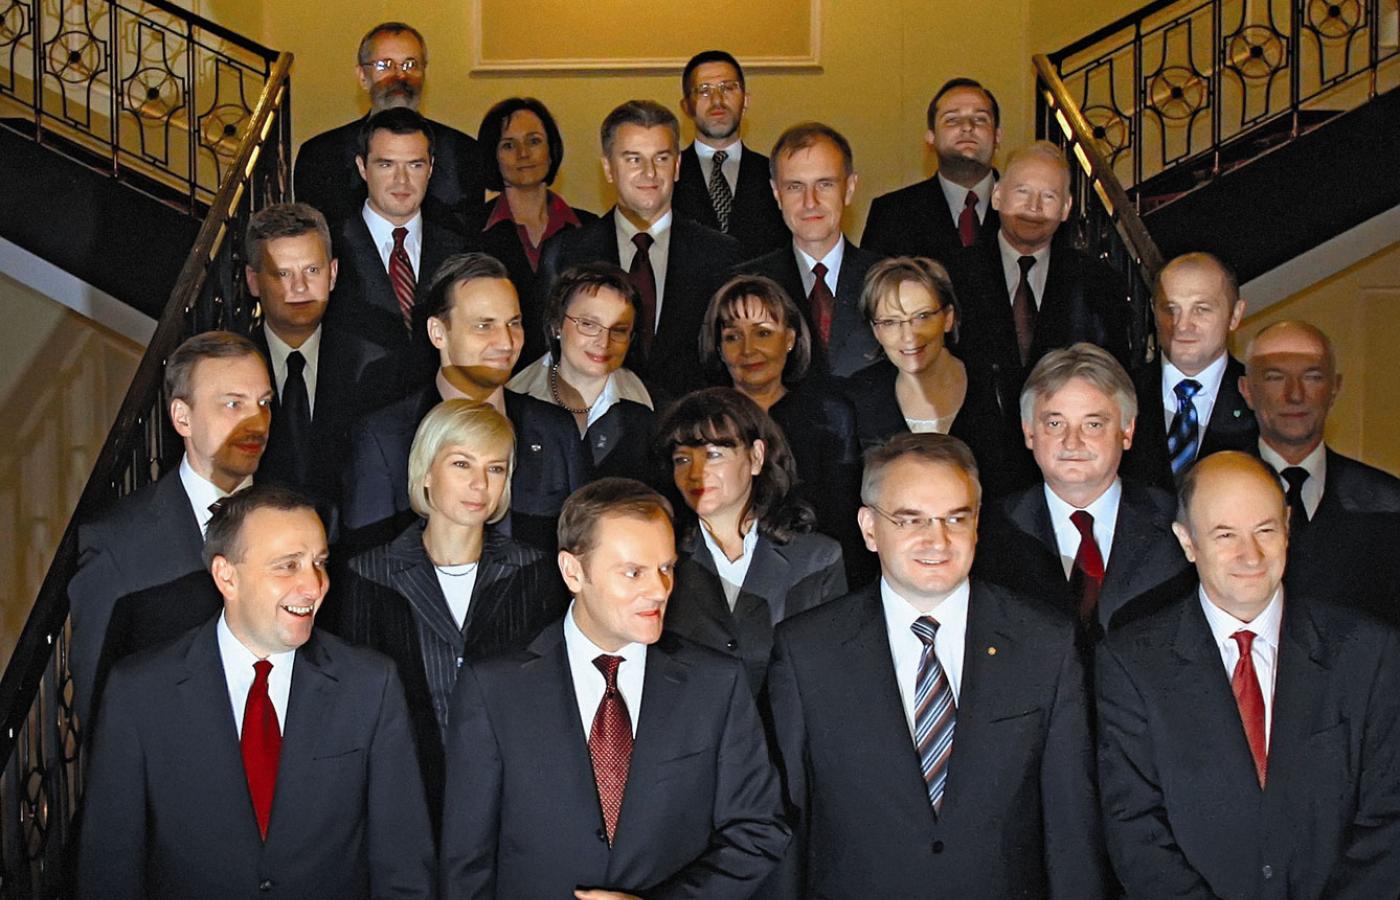 Rząd Donalda Tuska na starcie kadencji. Listopad 2007 r.